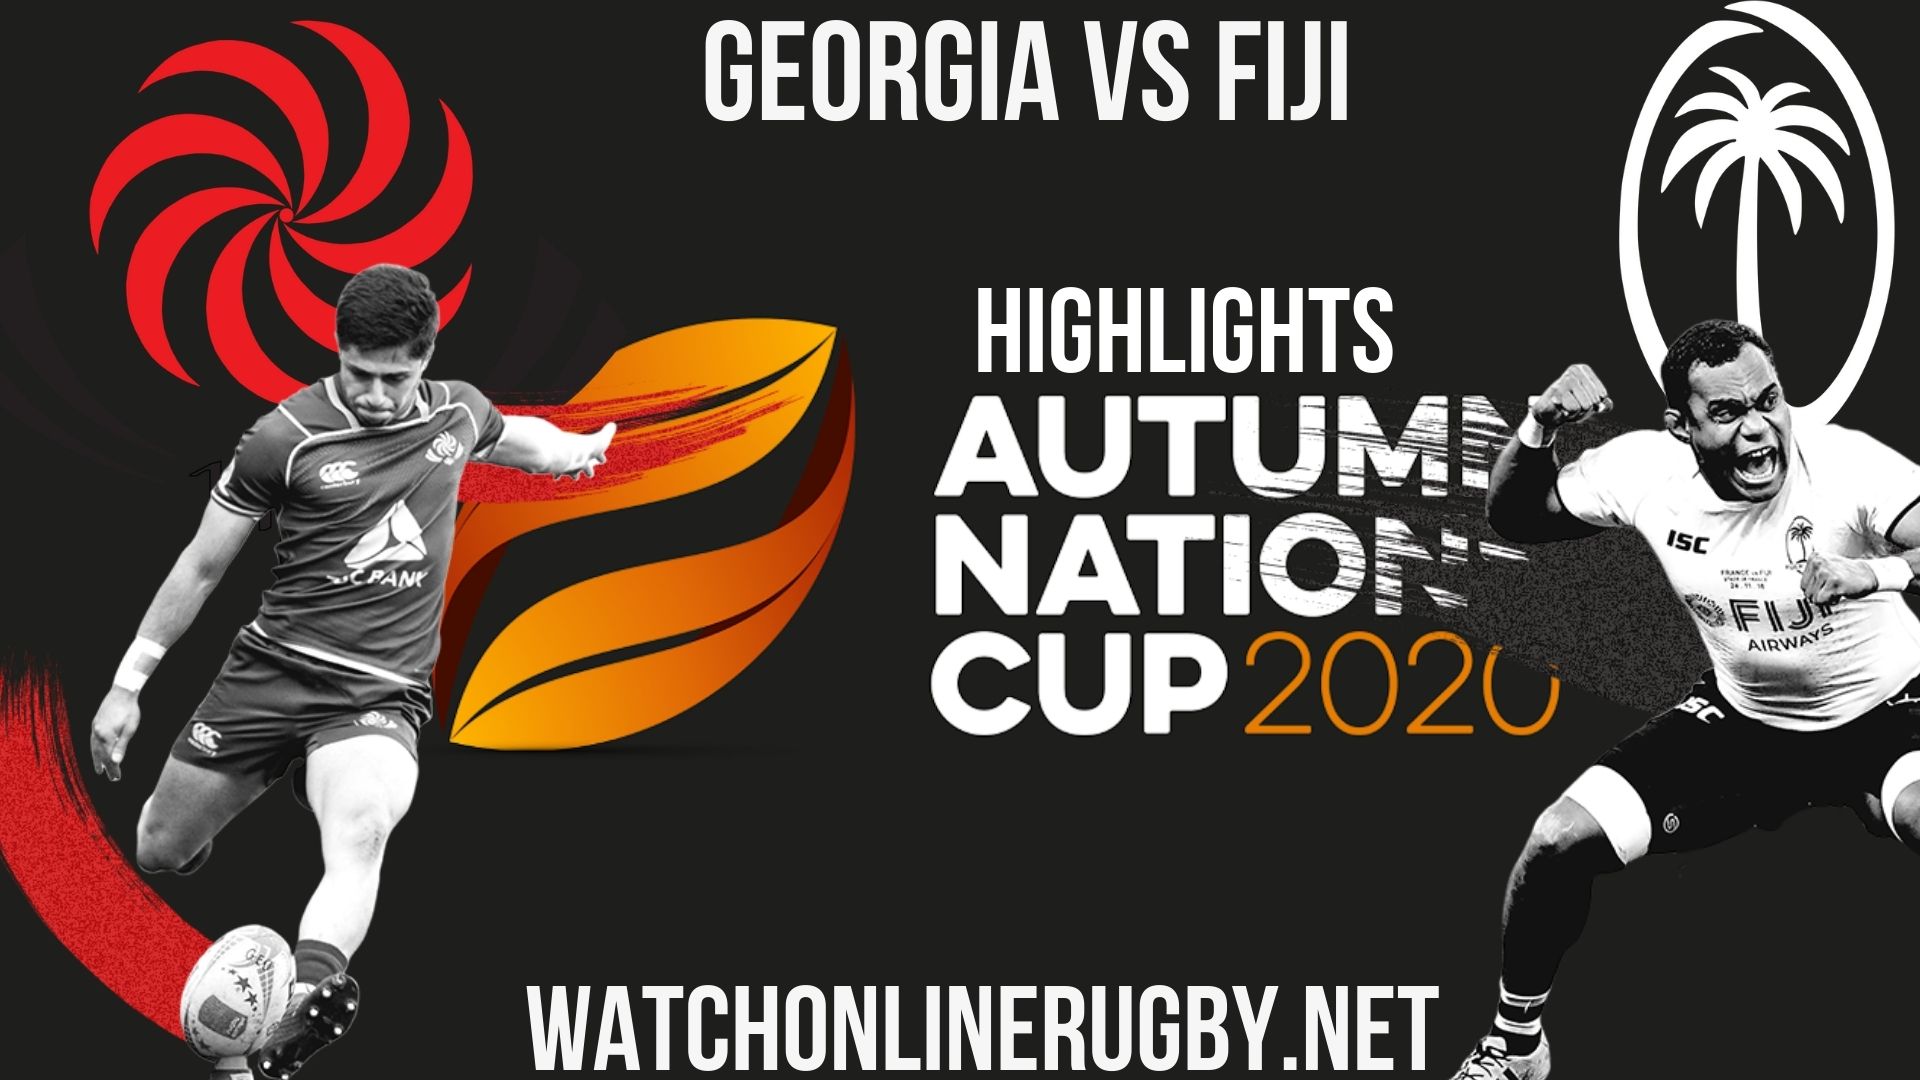 Georgia Vs Fiji Autumn Nations Cup 2020